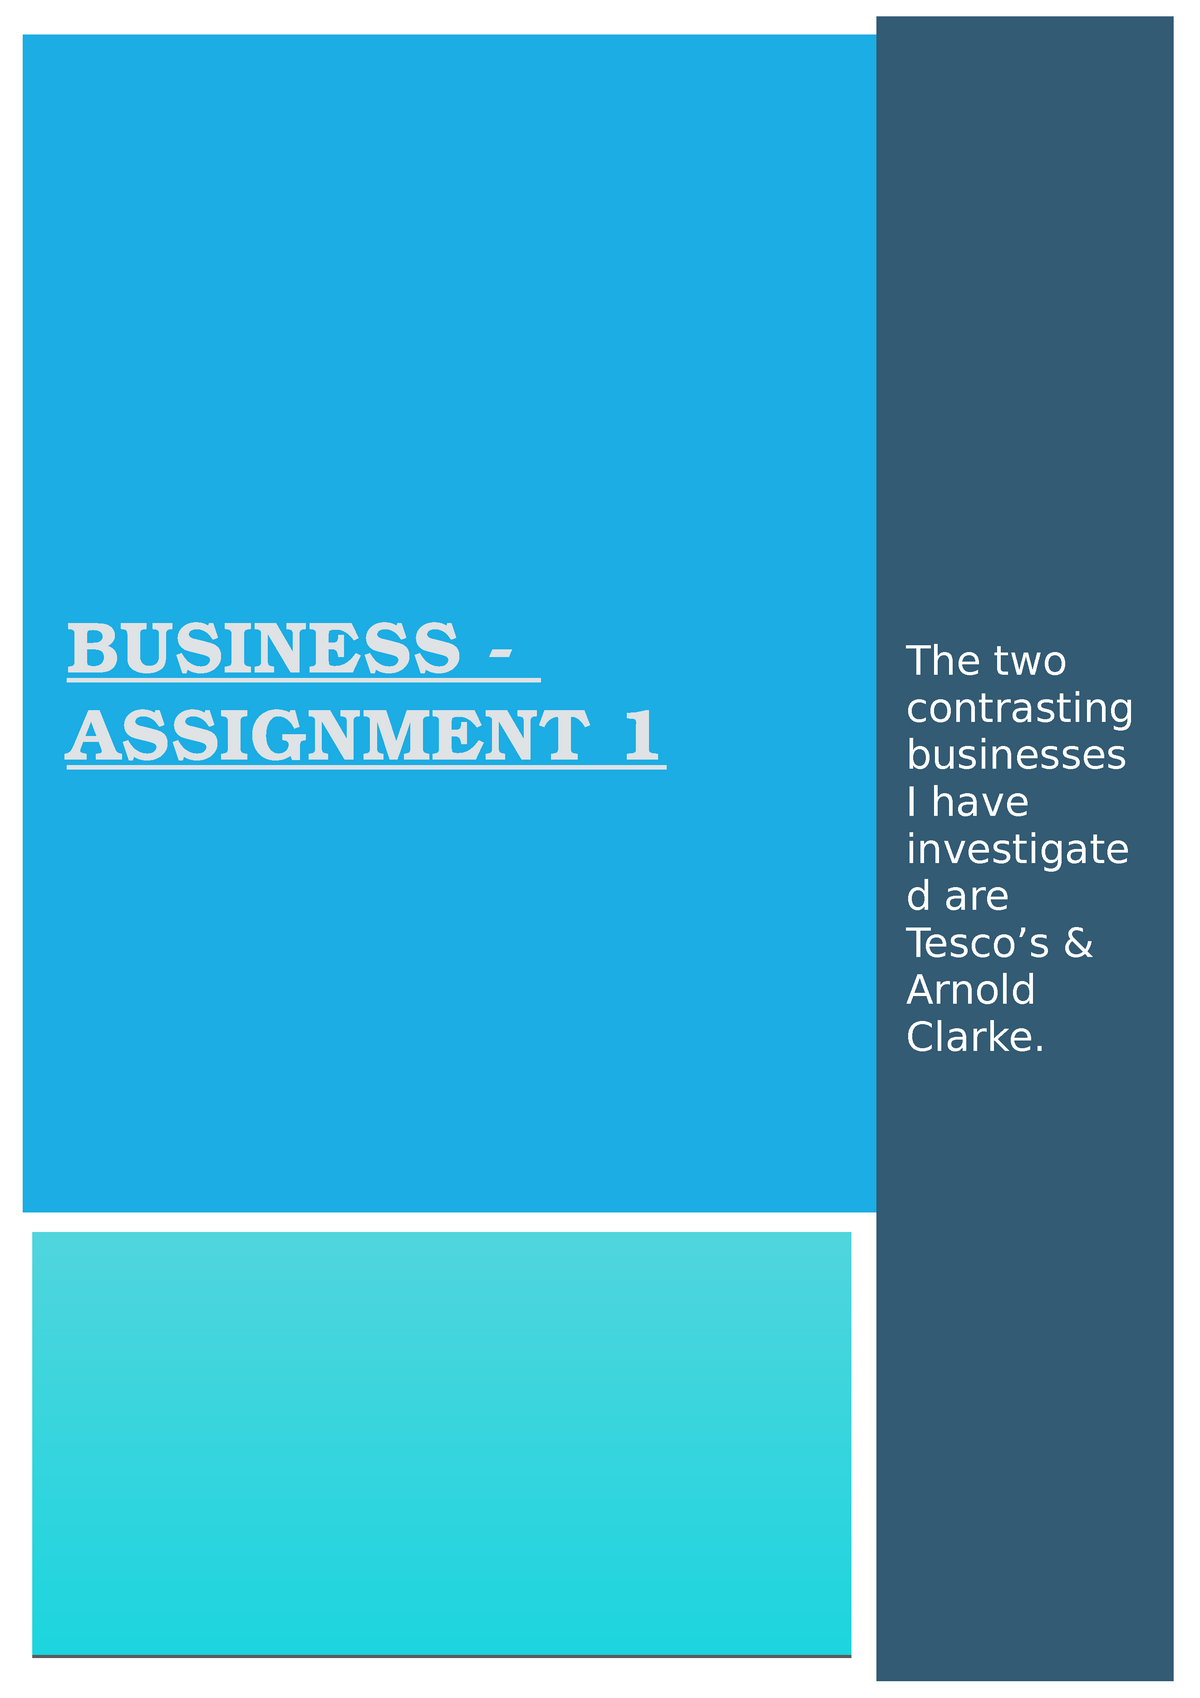 business unit 4 assignment 1